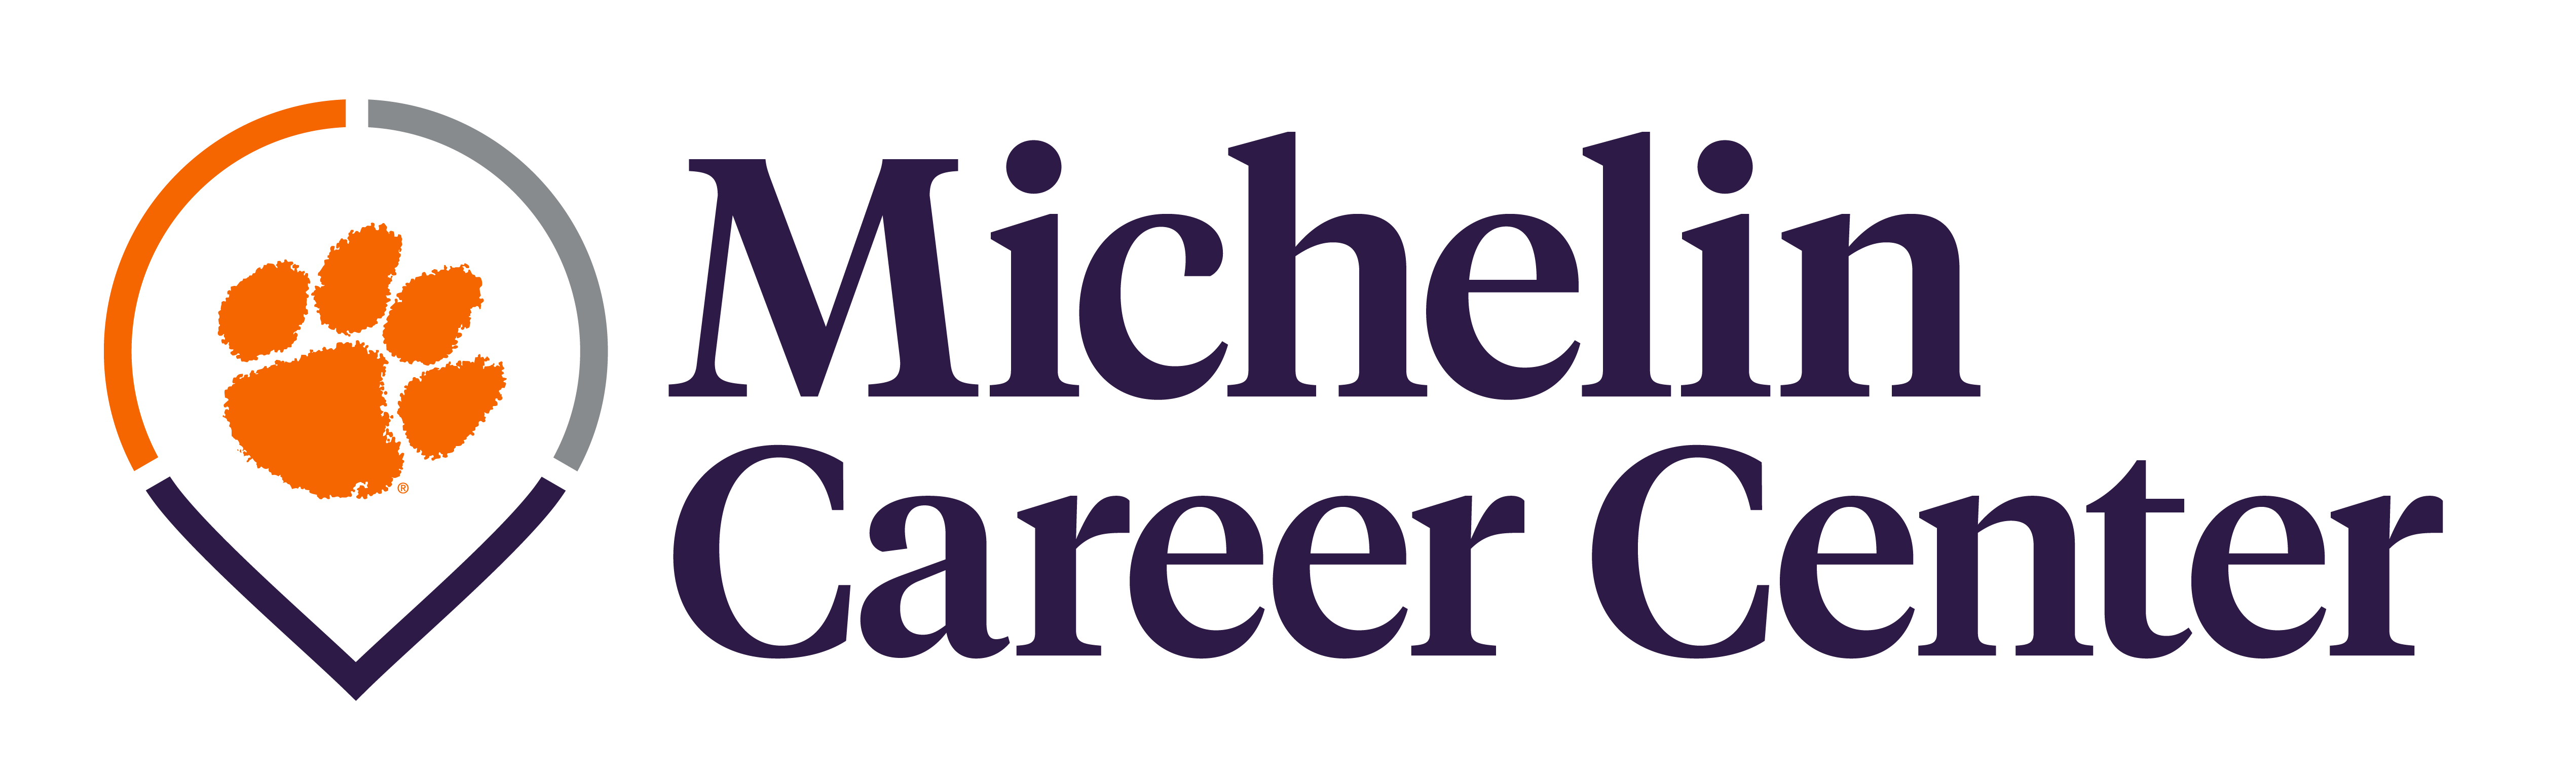 Michelin Career Center